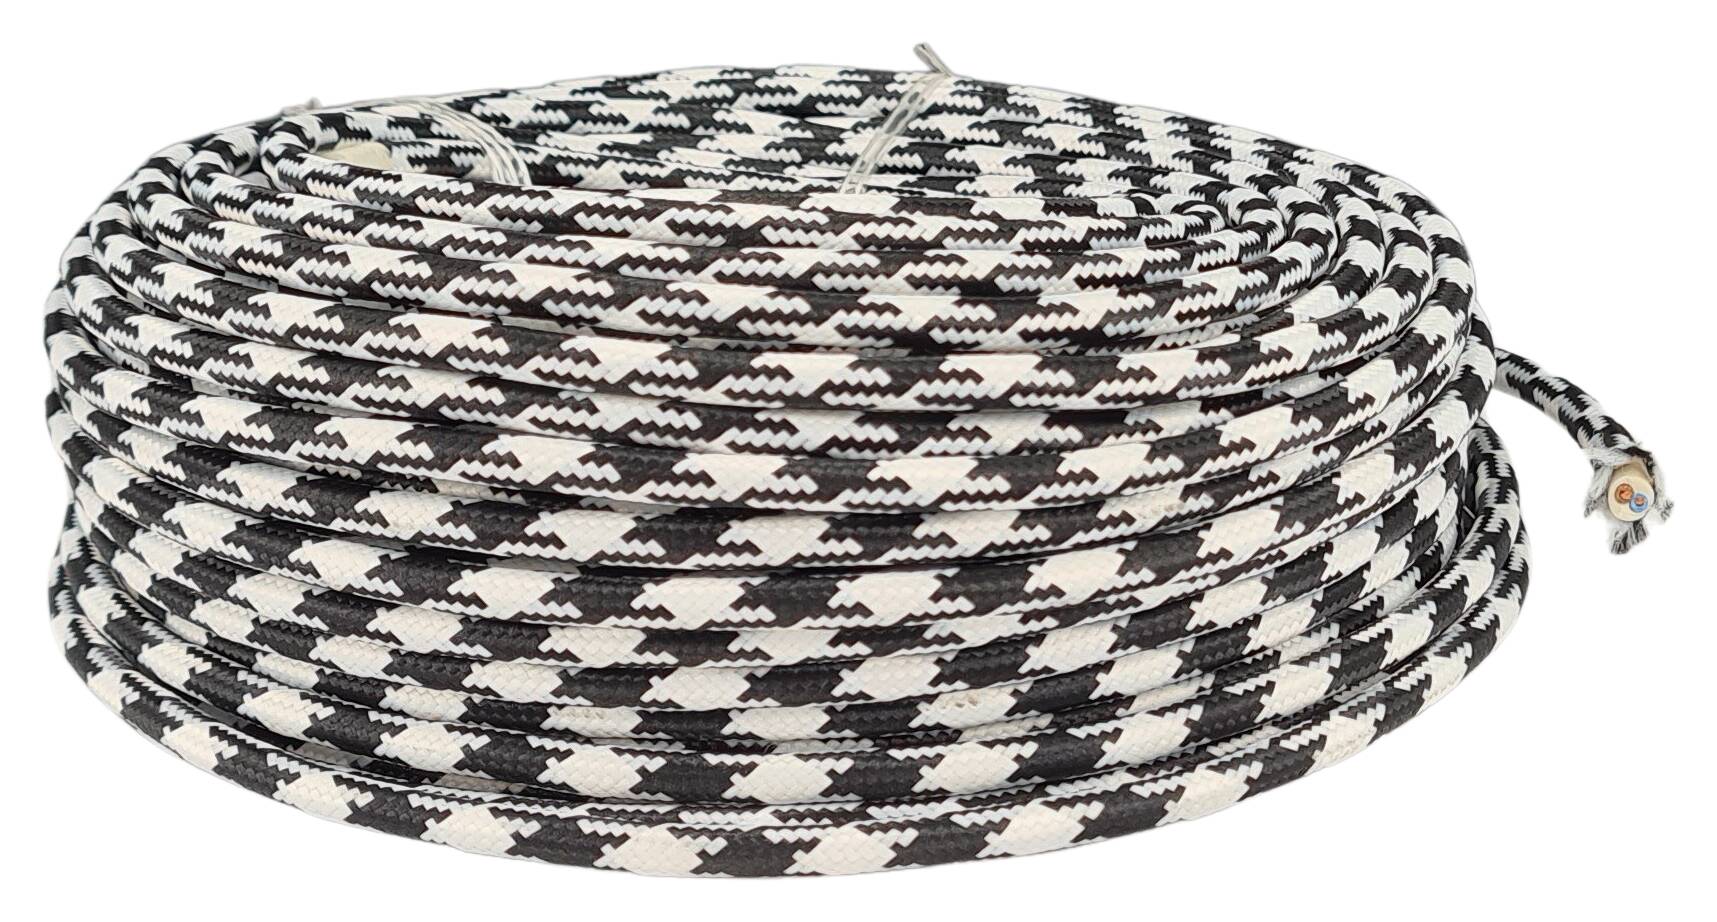 cable 2x 0,75 H03VV-F textile braided black-white (cockscomb)